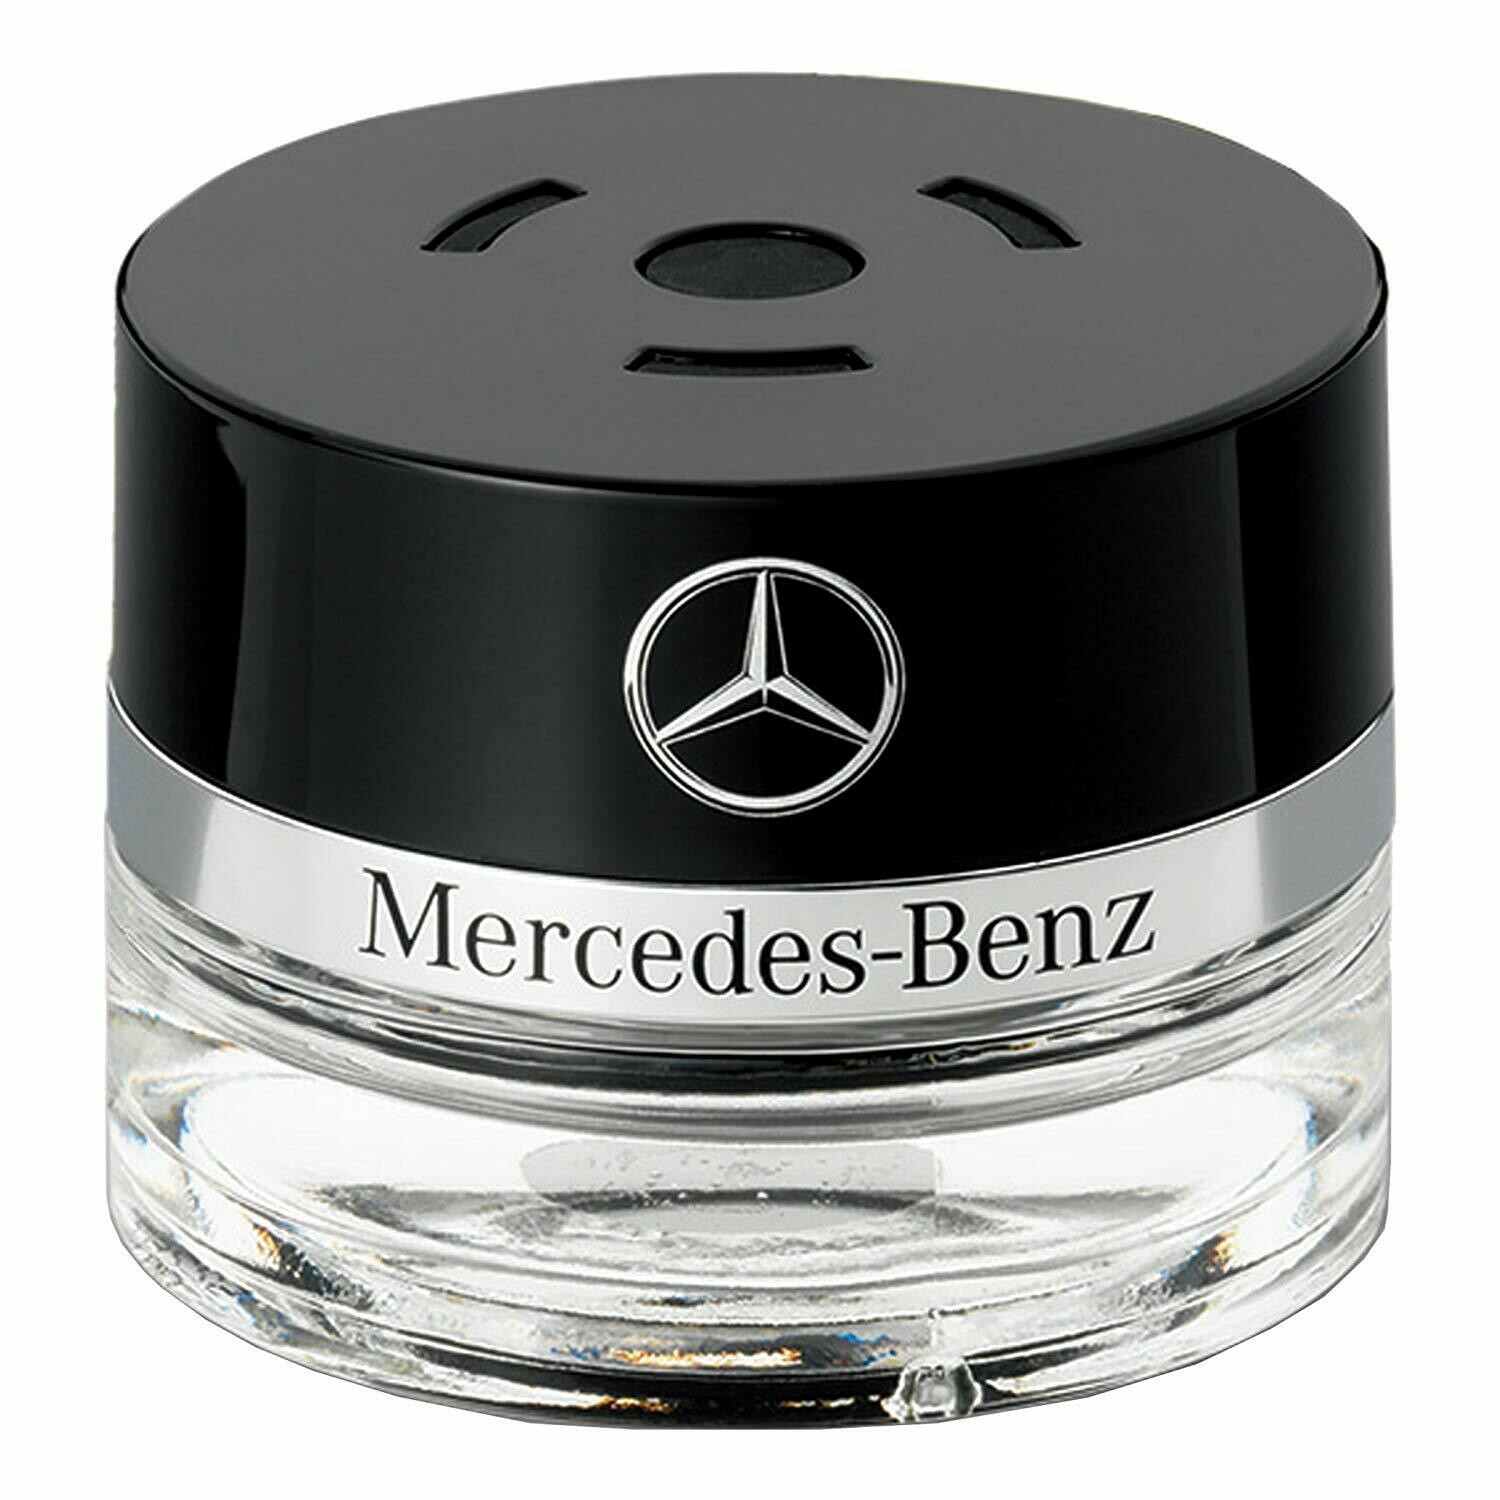 Mercedes-Benz Air Spencer Daybreak Mood